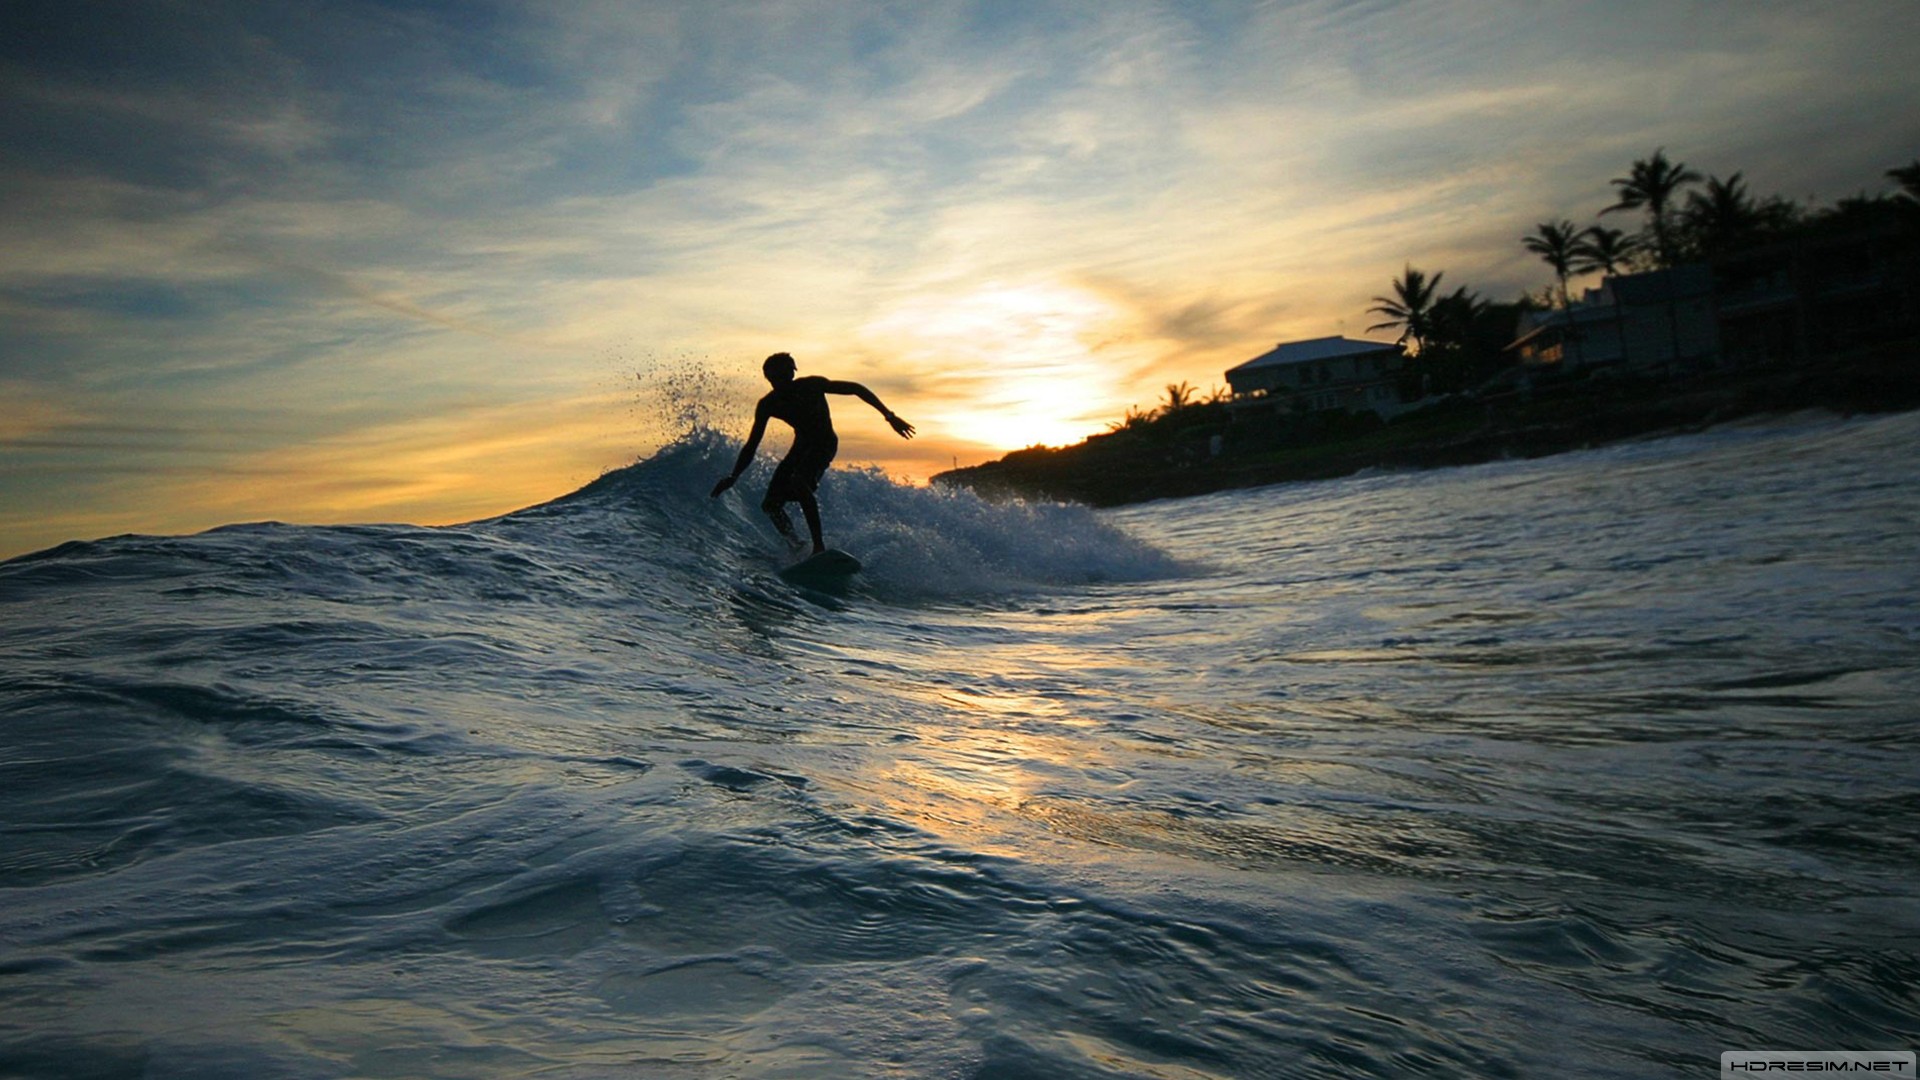 deniz,sörf,dalga,günbatımı